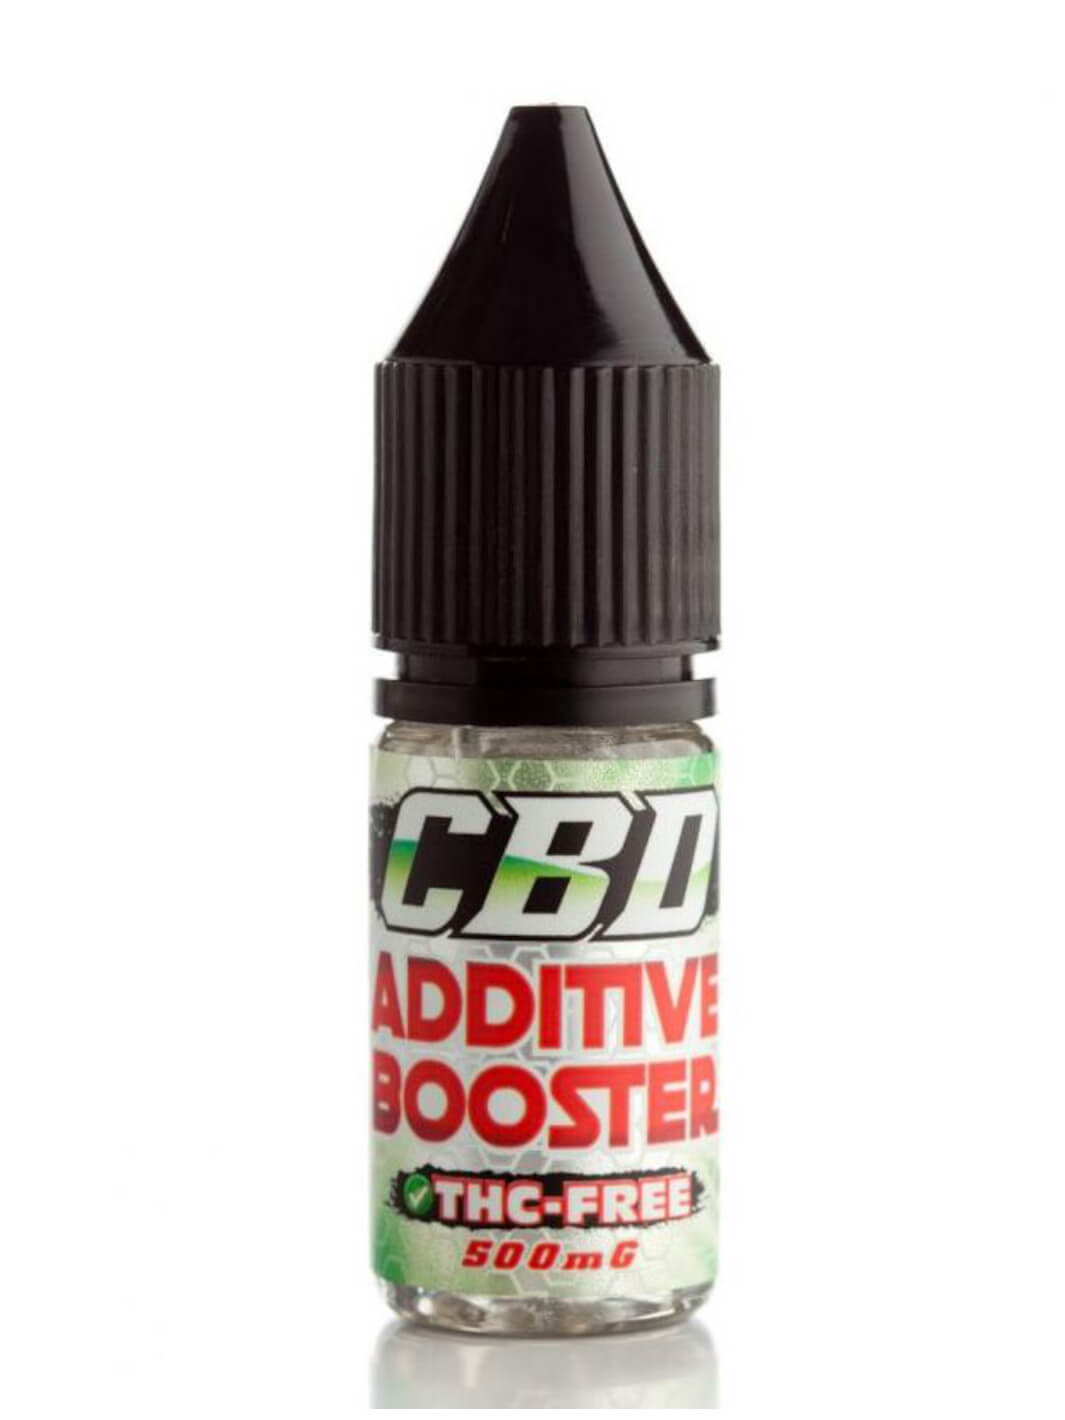 Krypted CBD Liquid additive Booster